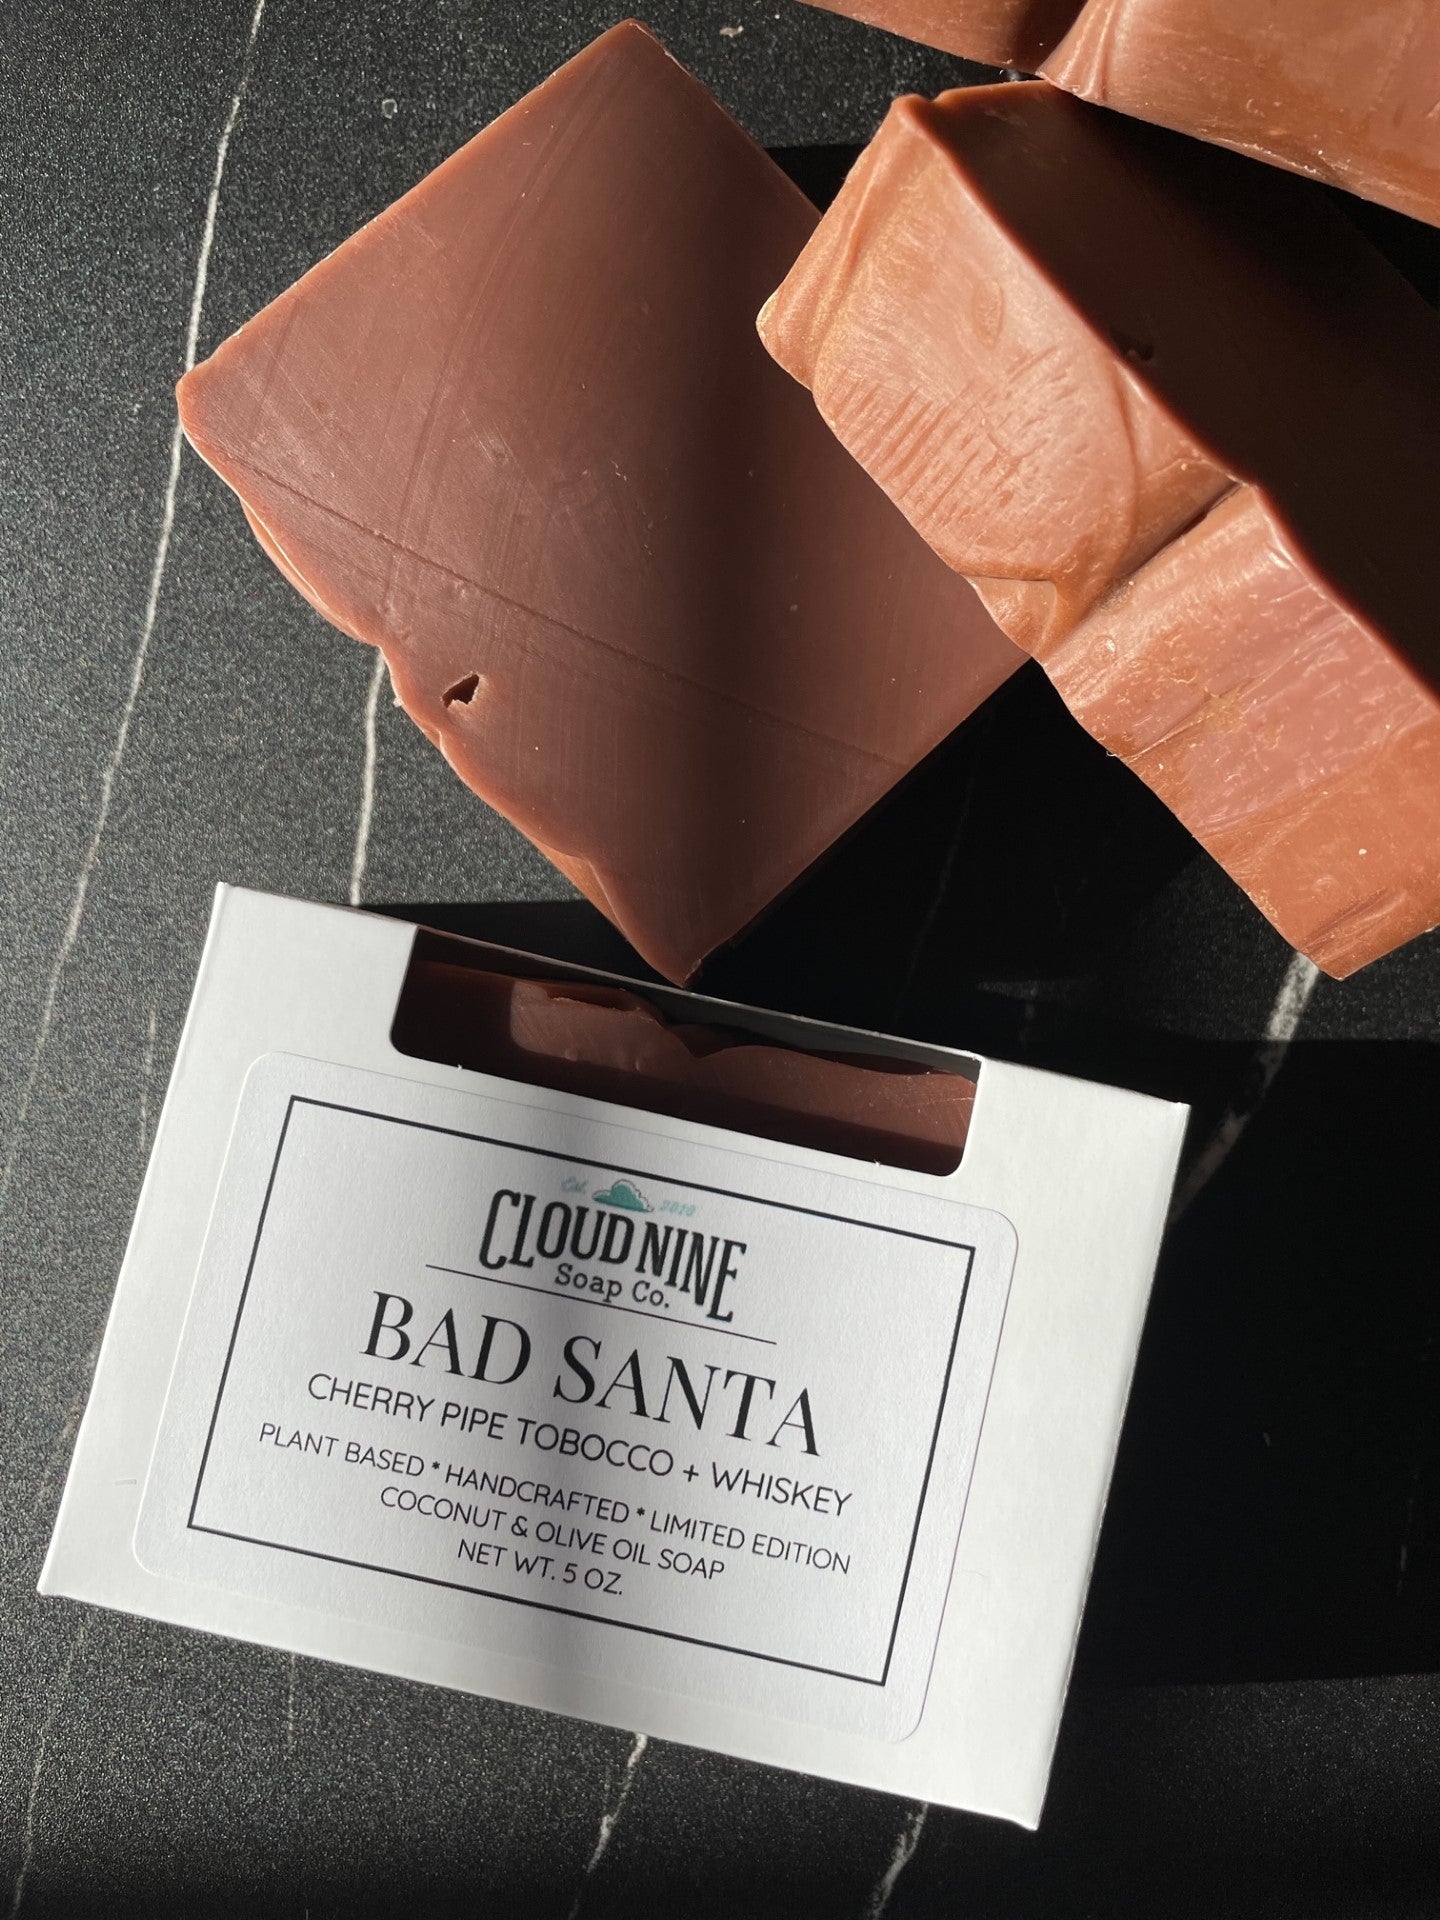 Bad Santa Limited Edition Soy Candle: Cherry Tobacco, Whiskey, Vanilla